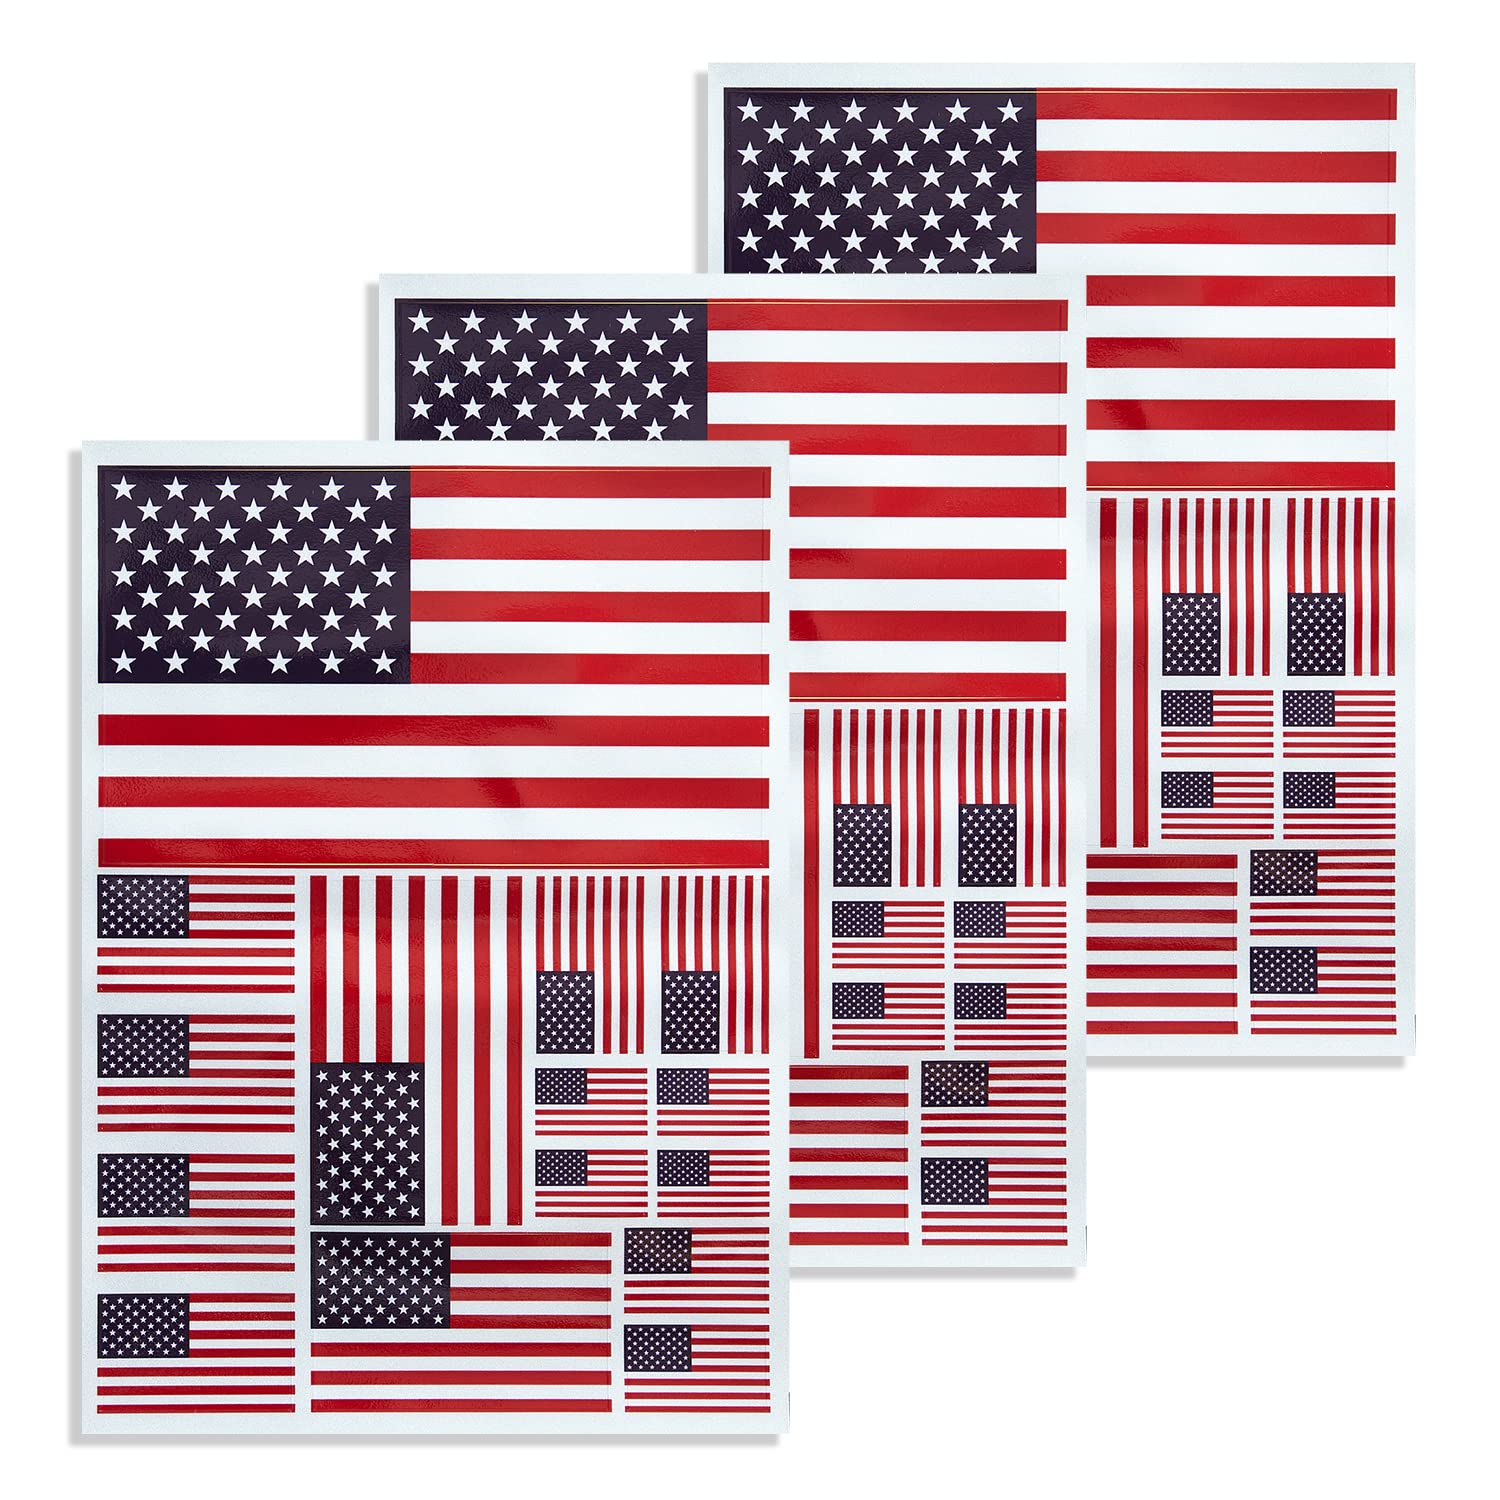 CANTENDO 3Pack U.S Flag Decal - U.S Flags Reflective Vinyl Car